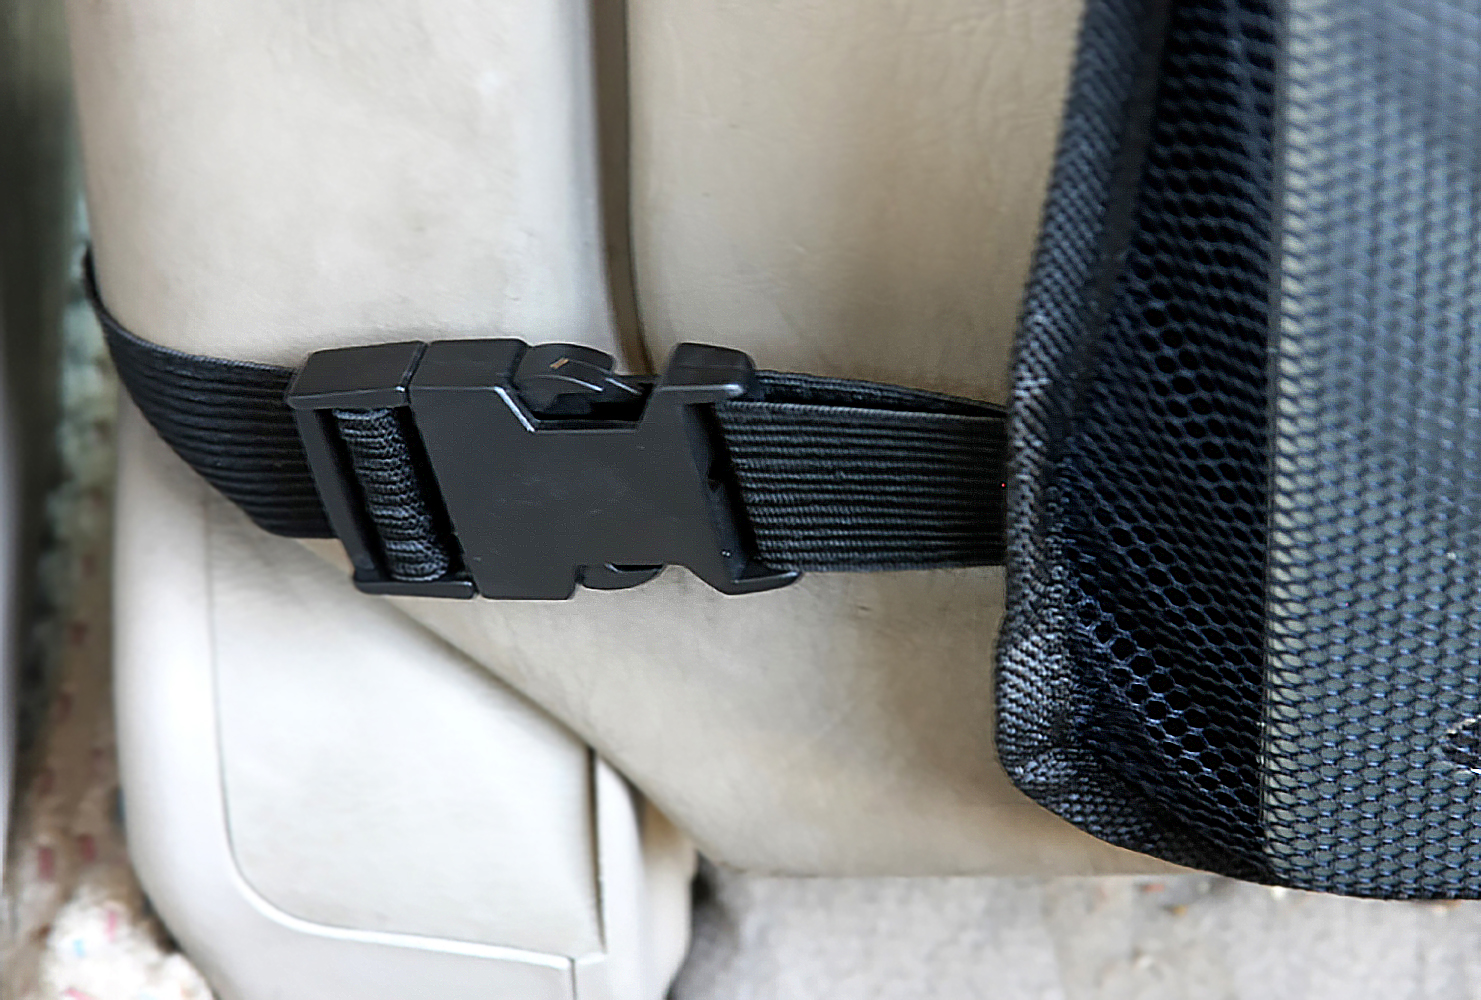 YupbizAuto Car Auto Front/Back Seat Organizer Cell Phone Holder Multi-Pocket Travel Storage Bag, Black Color - image 6 of 6